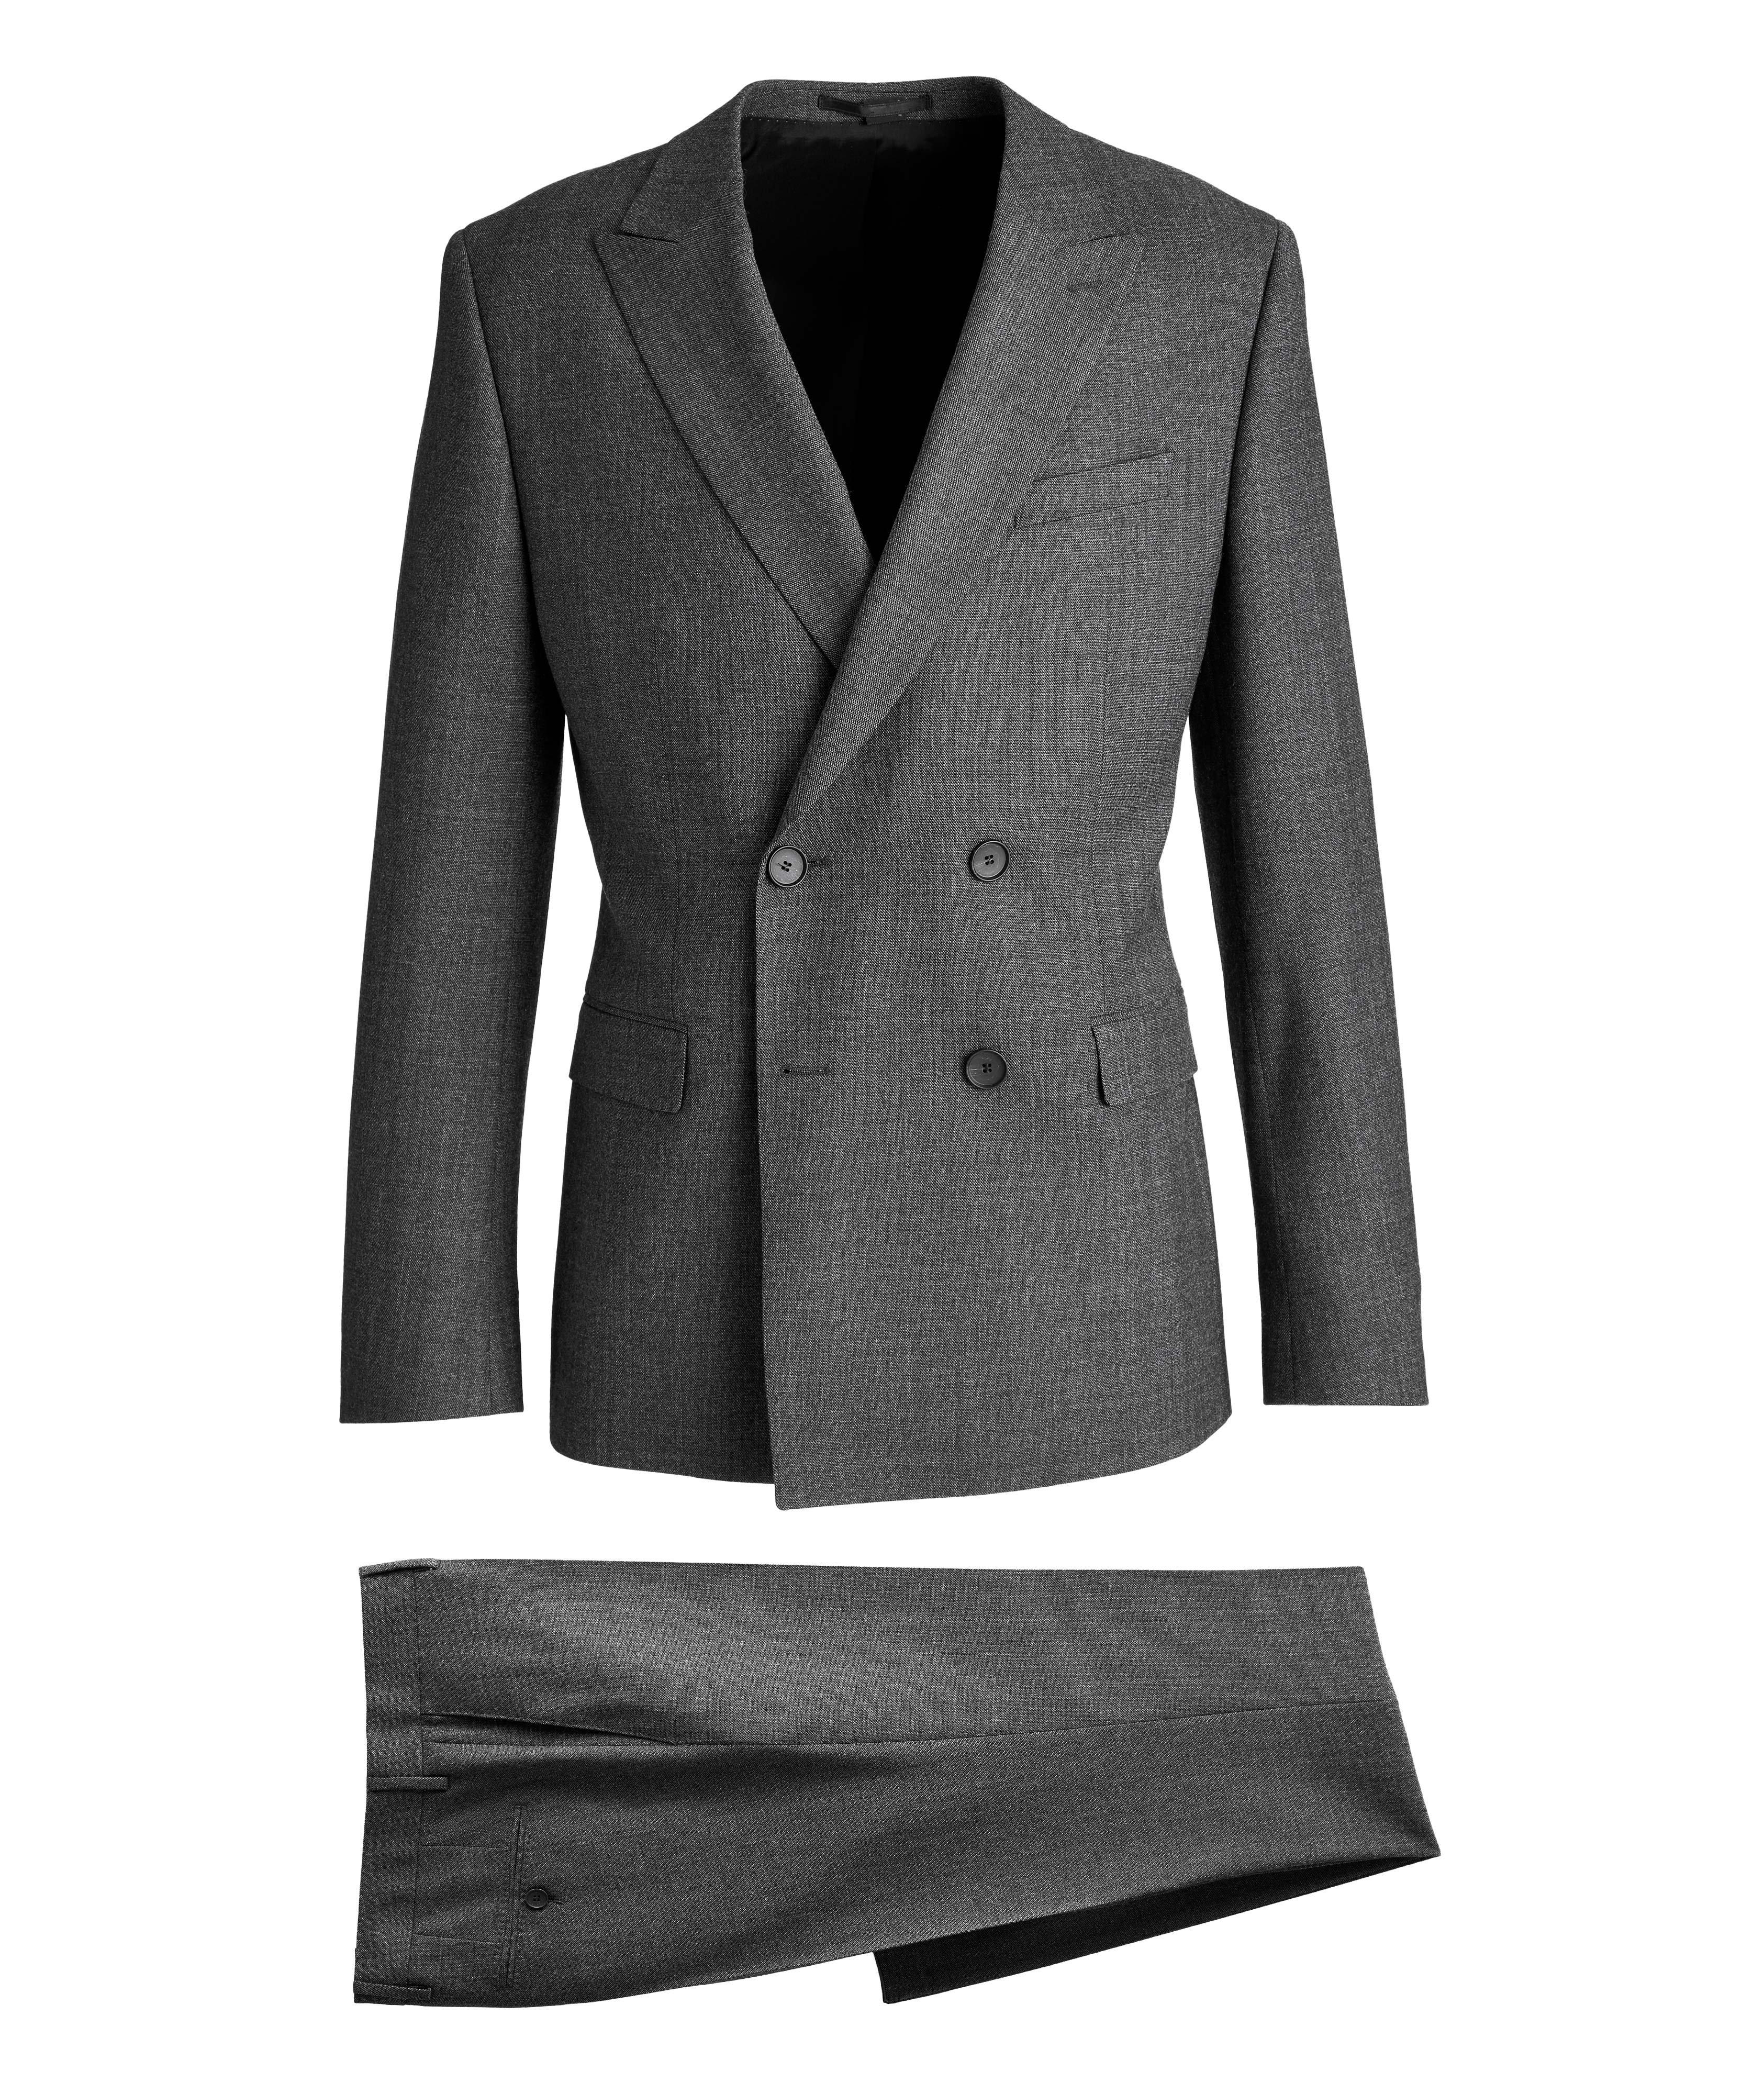 Sean/Upton Virgin Wool-Blend Suit image 0